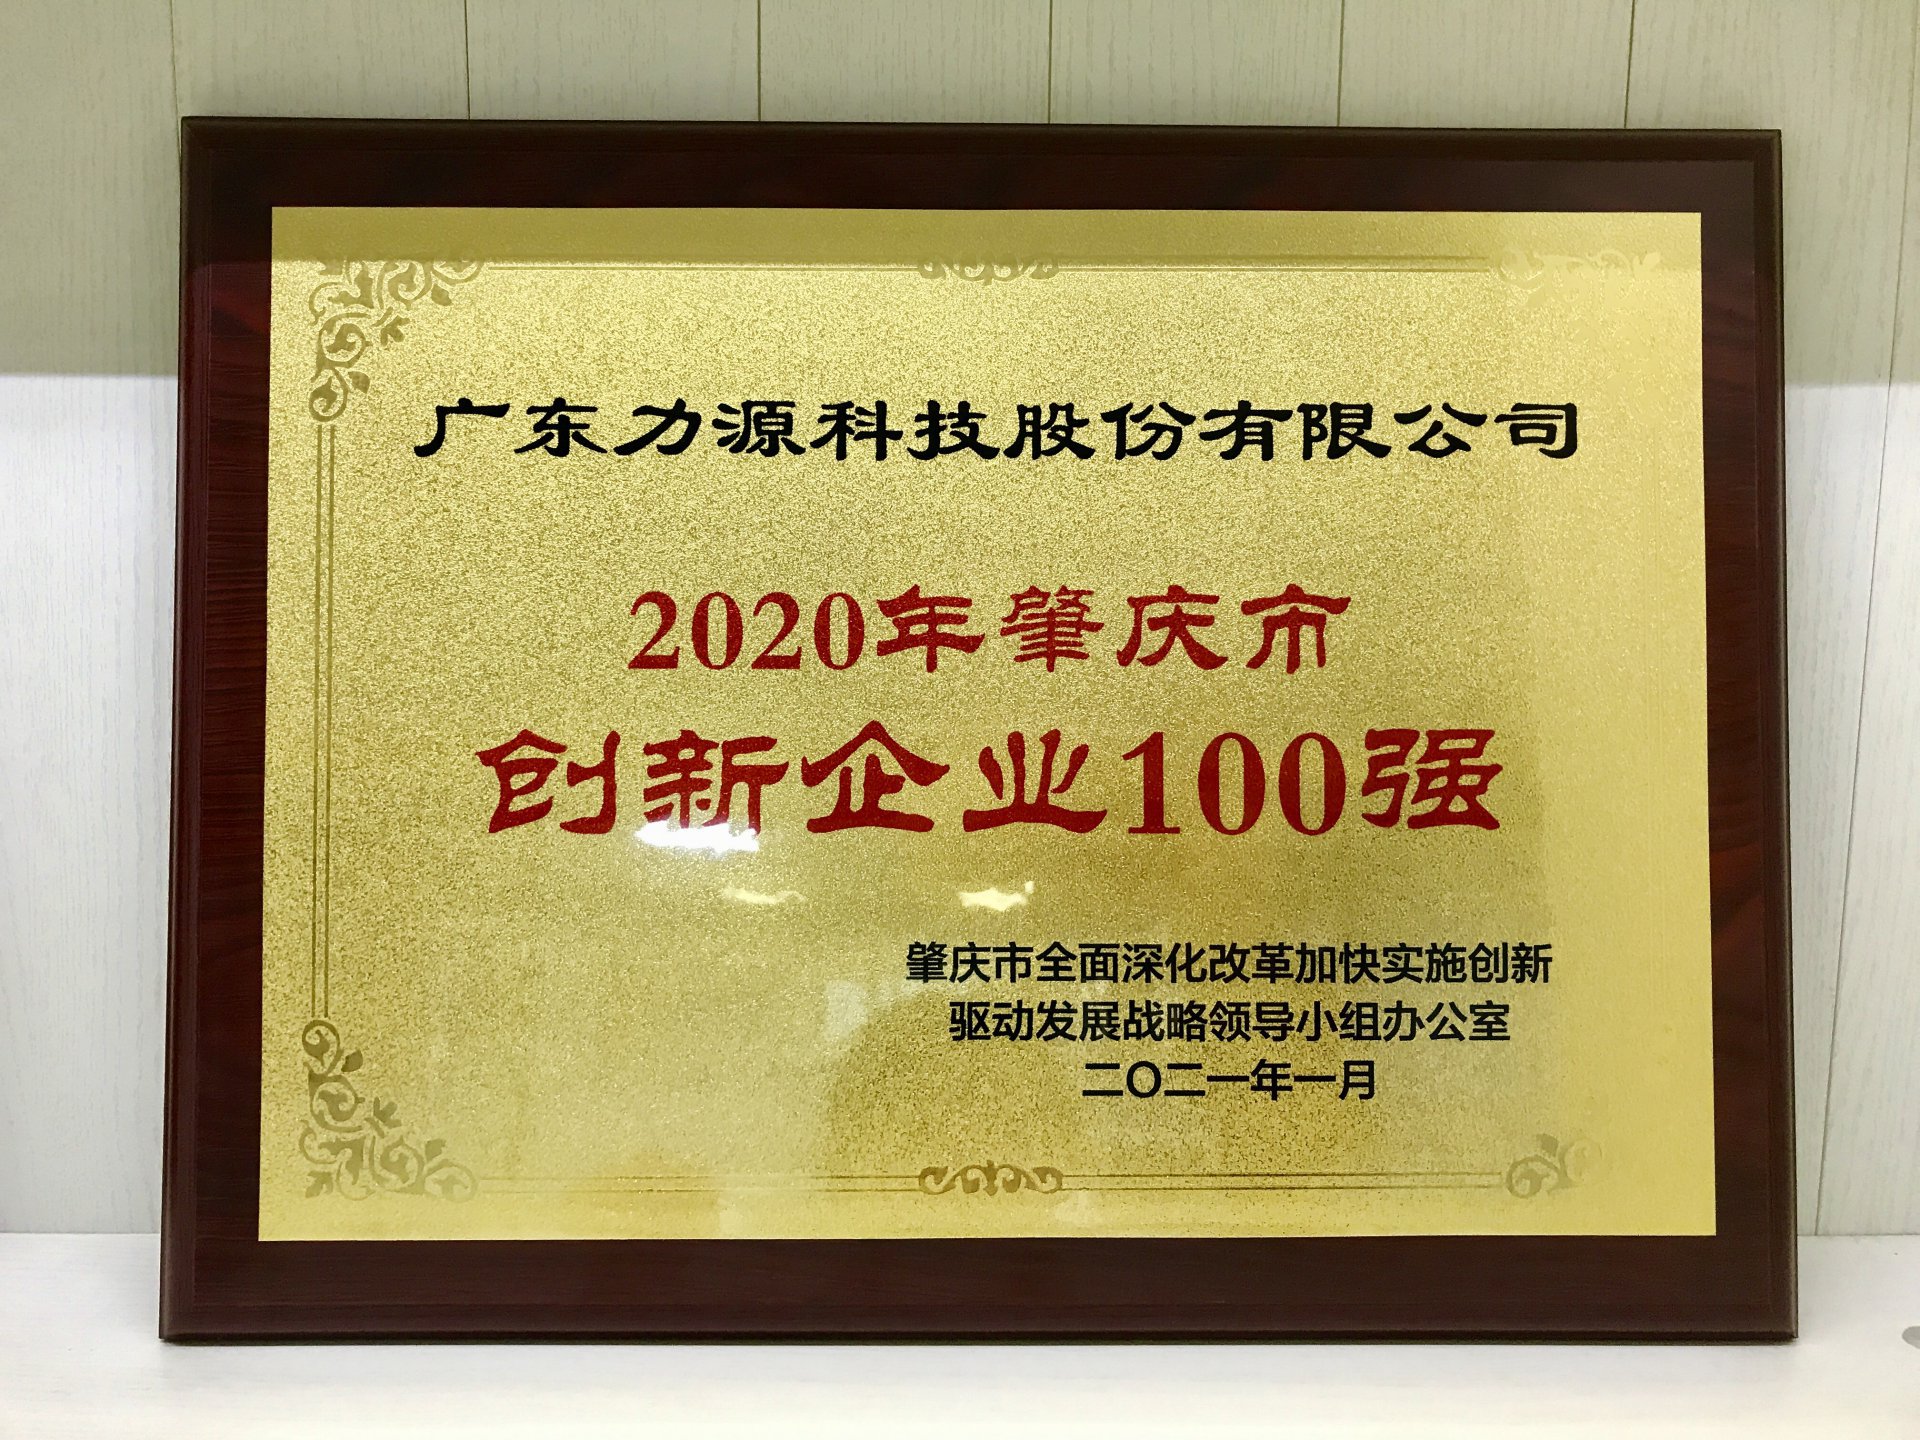 Zhaoqing top 100 innovative enterprises